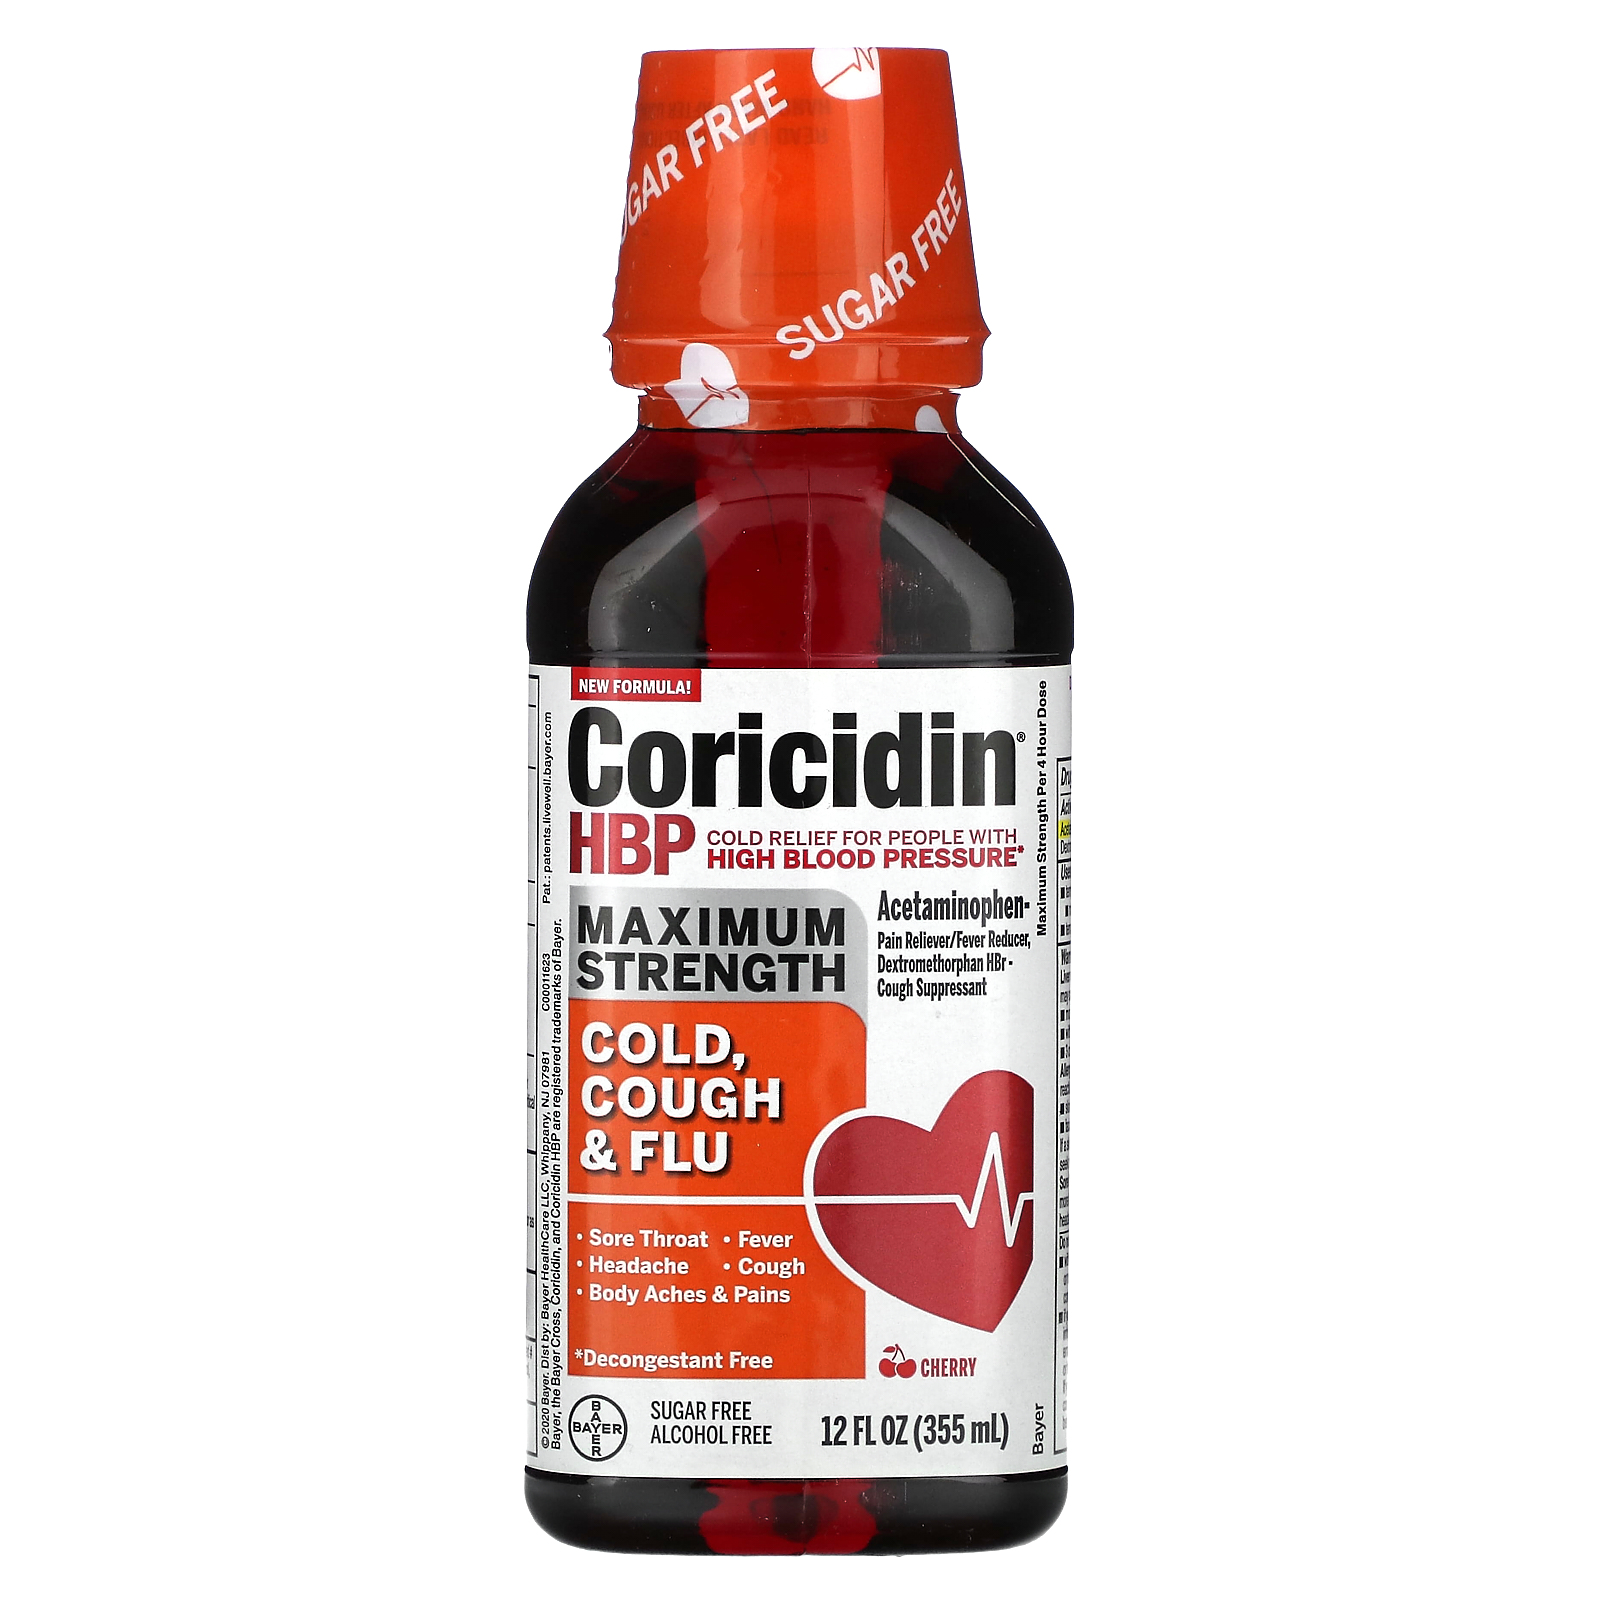 Coricidin. Cough cold